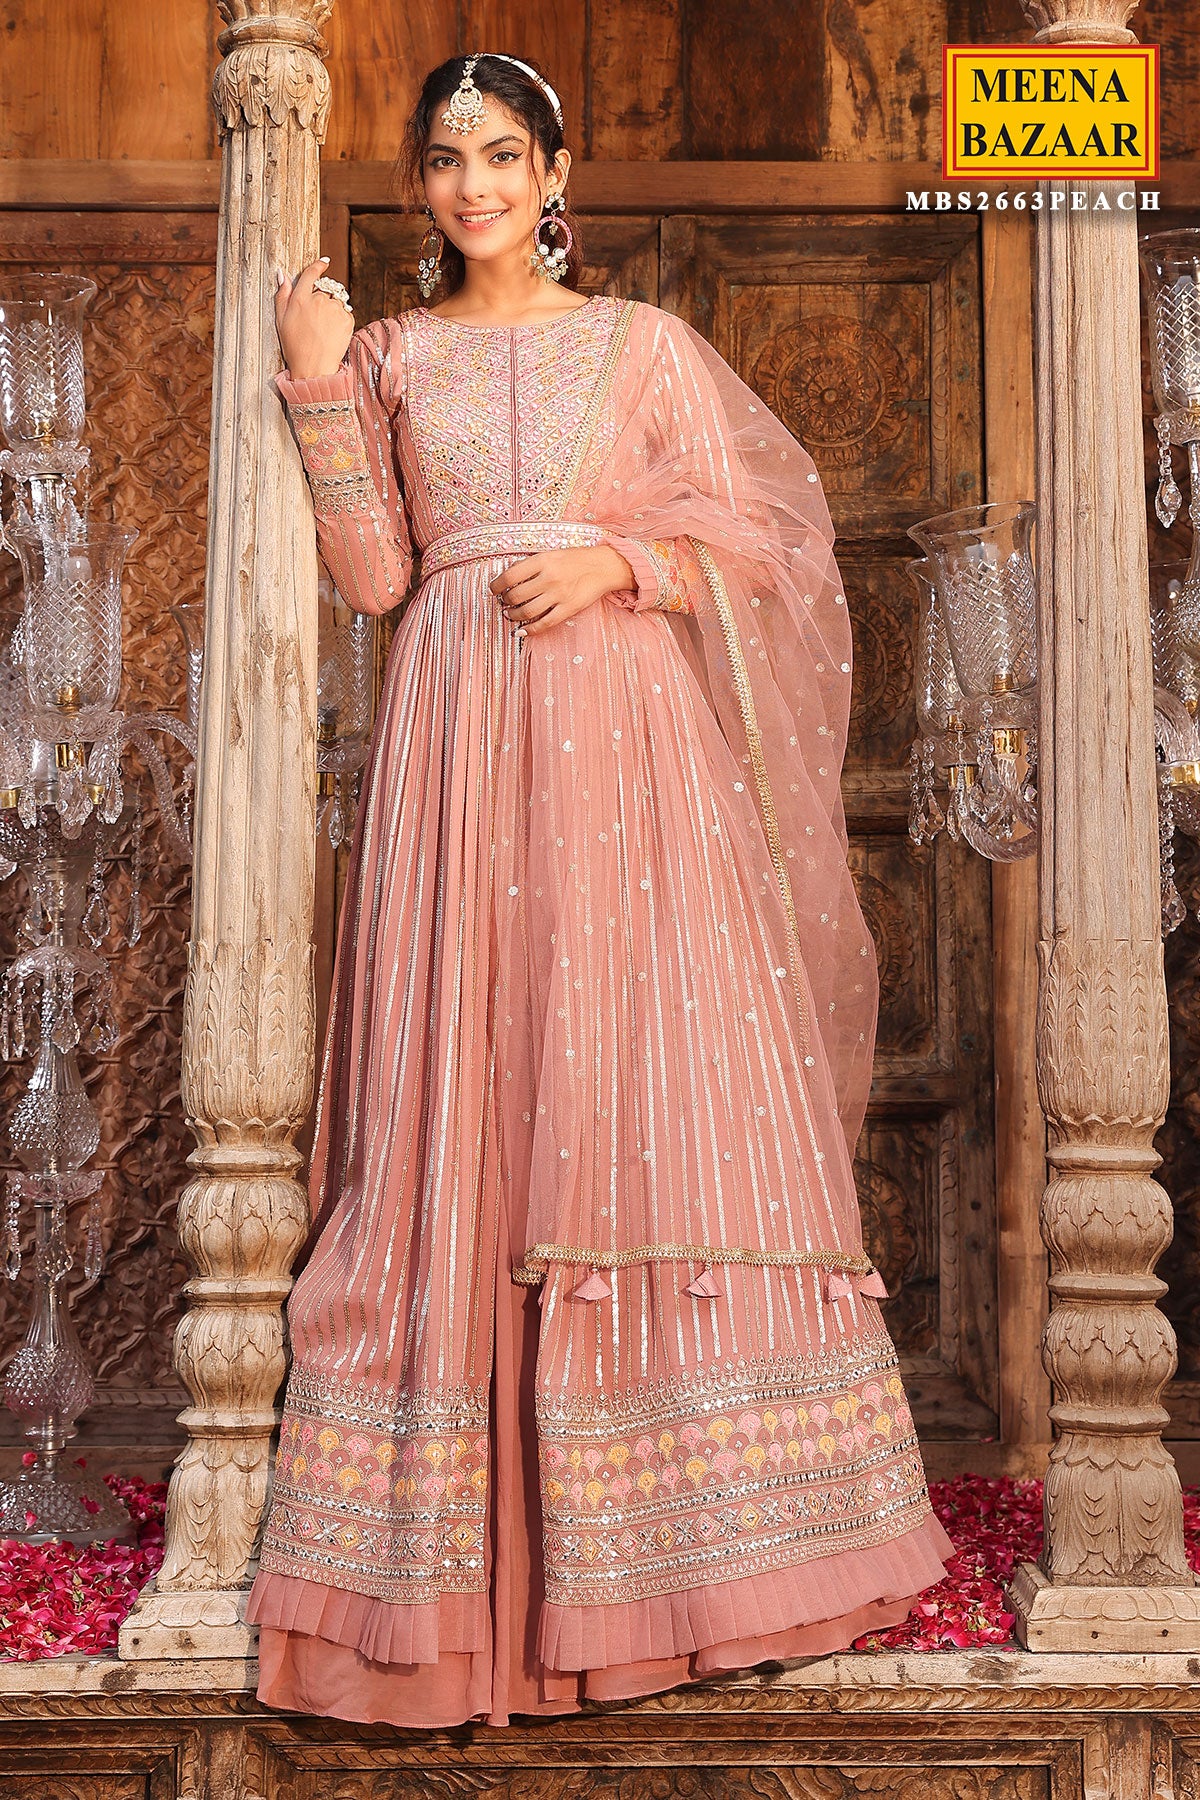 Meena Bazaar | Sarees | Indian fashion, Saree designs, Designer sarees  online shopping